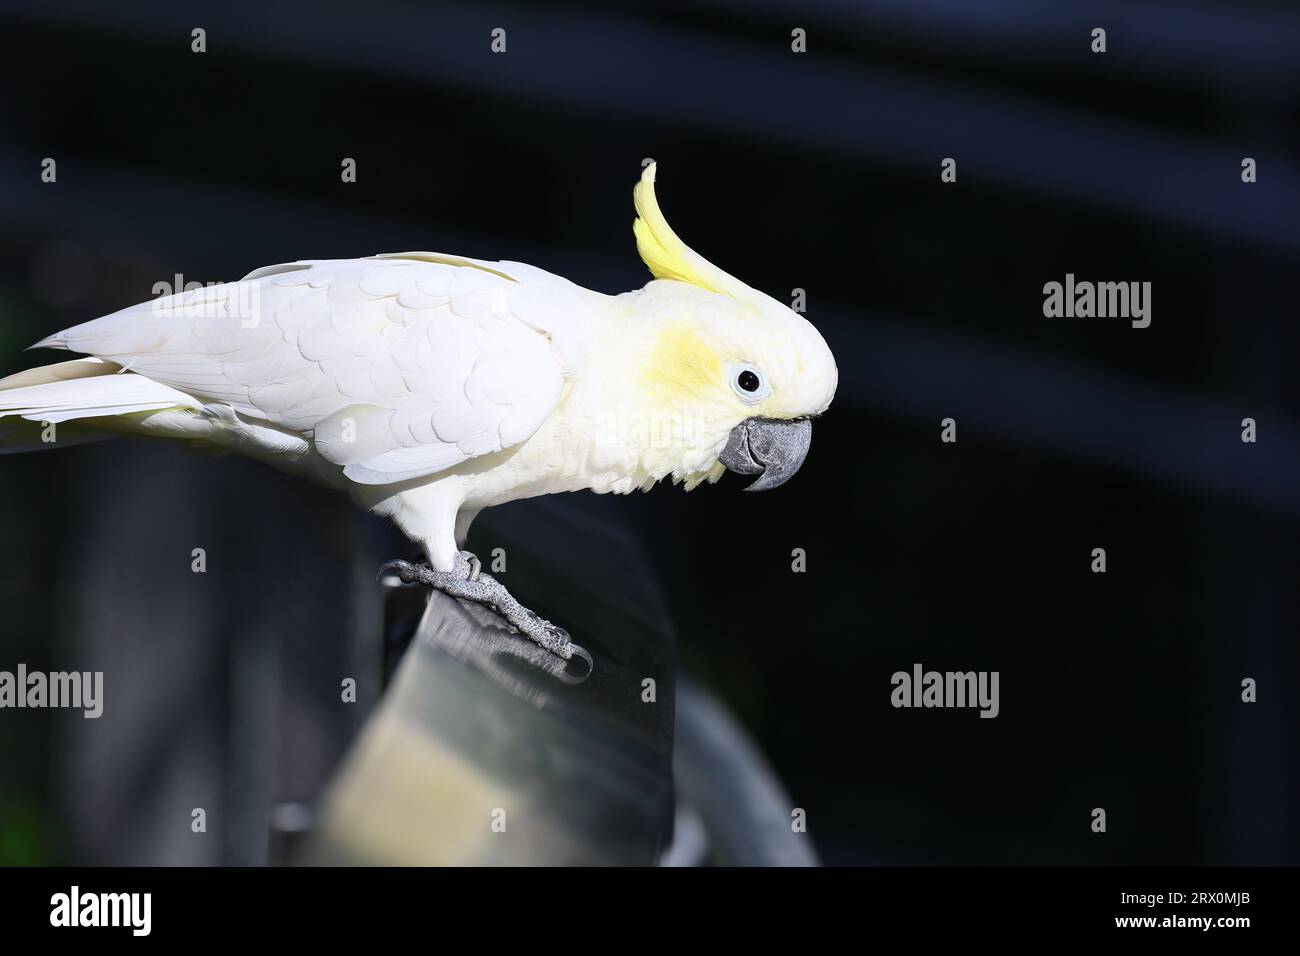 A close-up of a white medium sulphur-crested cockatoo (Eleonora cockatoo) Stock Photo